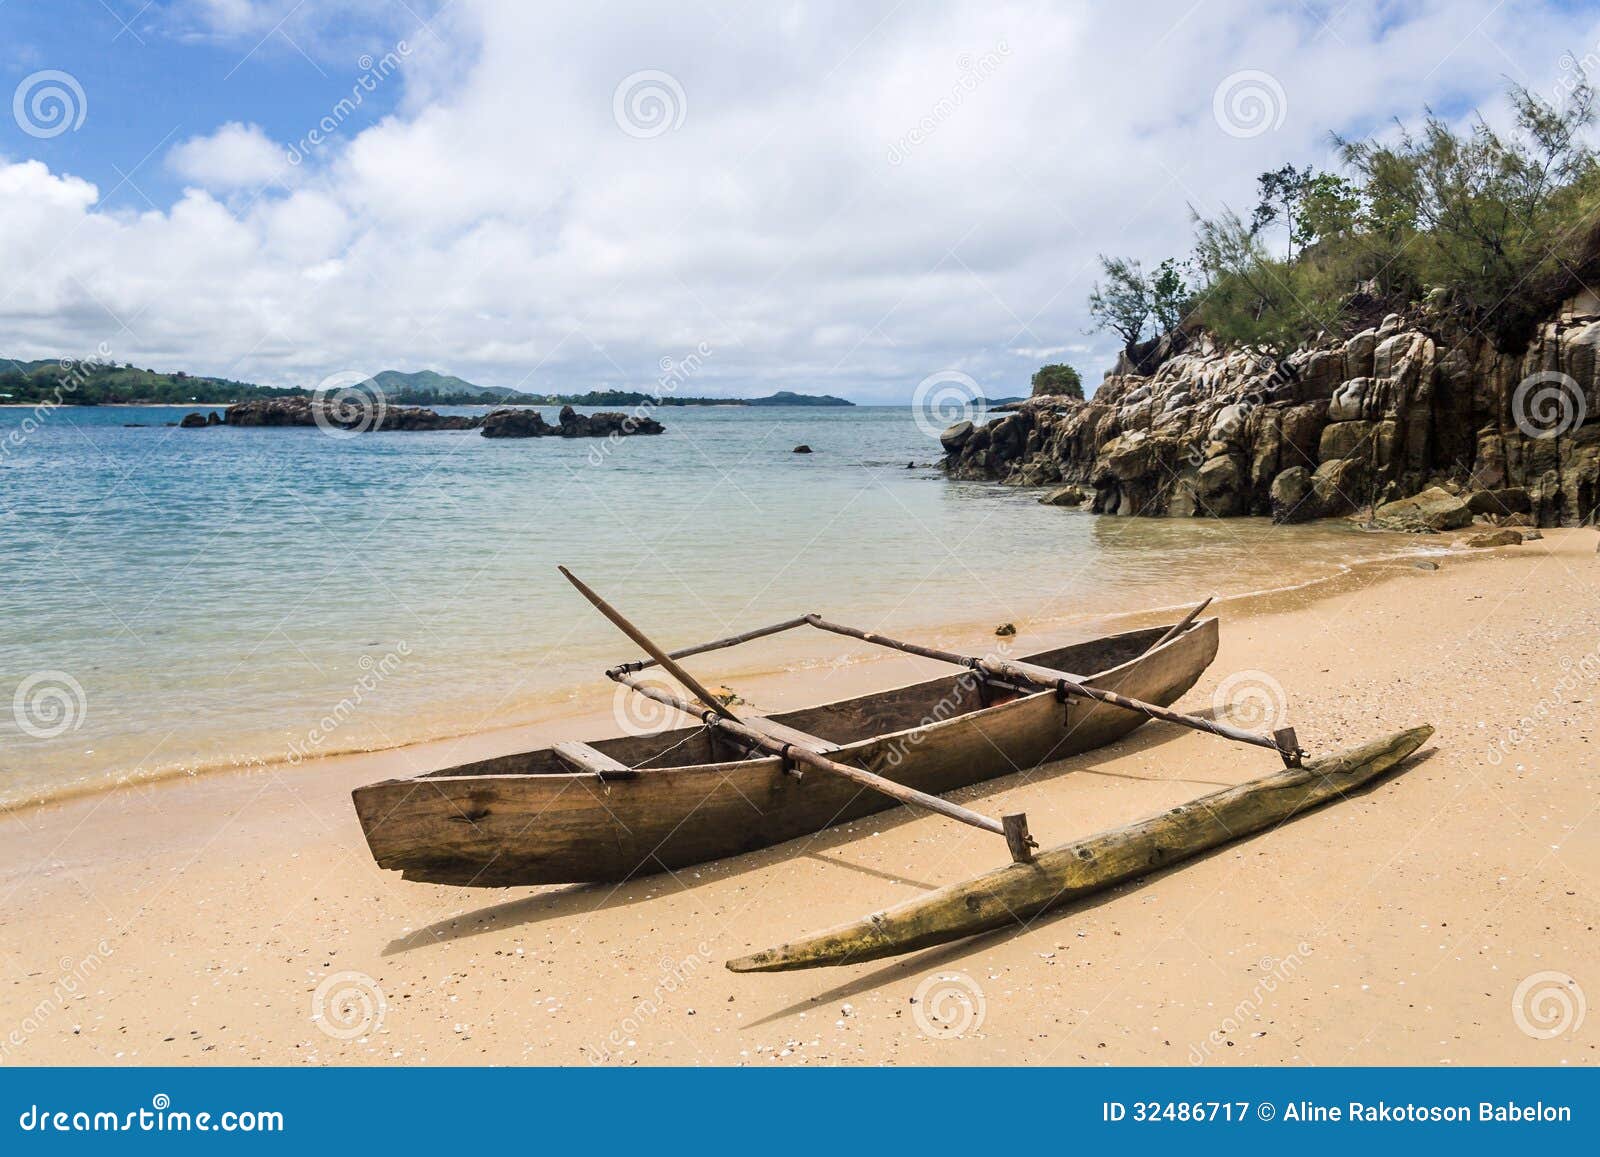 Canoe On The Beach Royalty Free Stock Photography - Image 